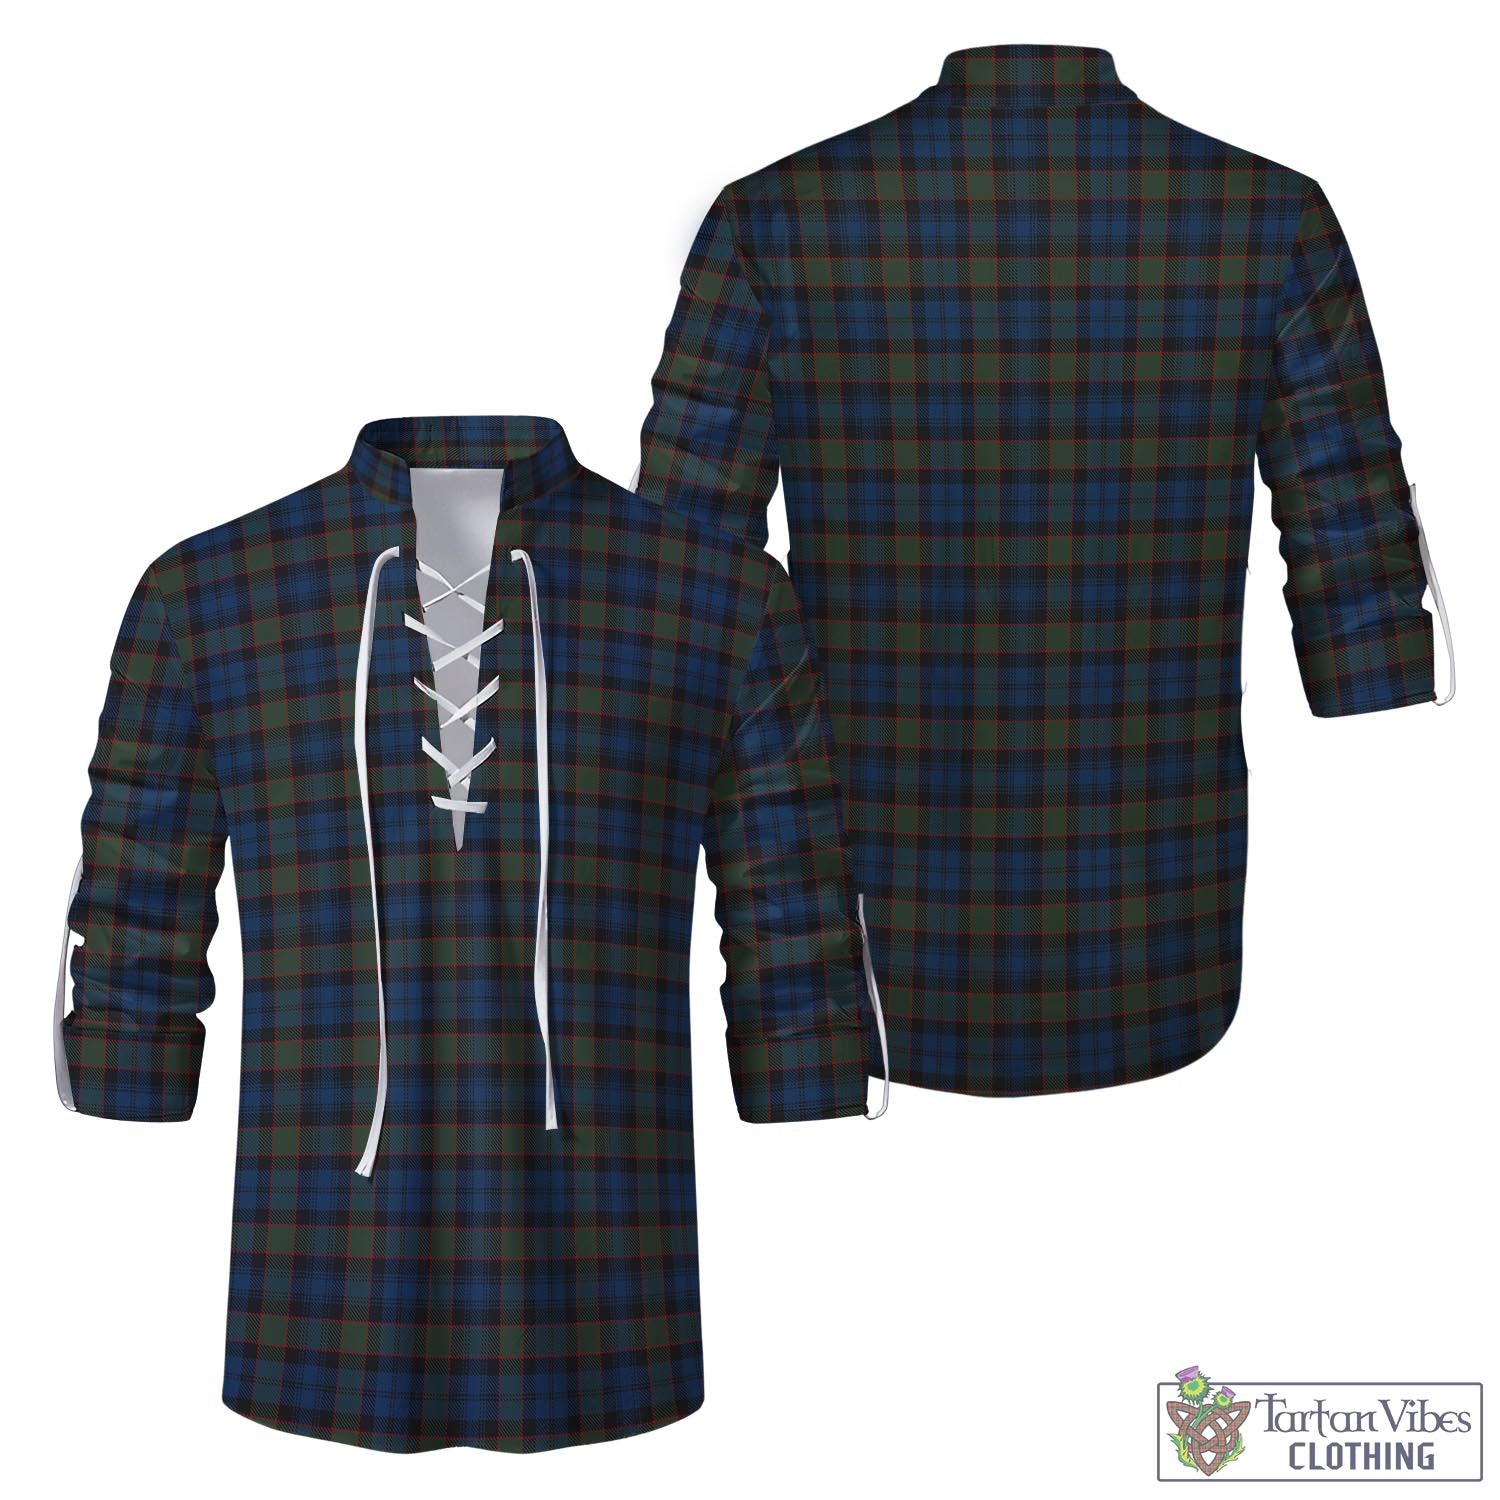 Tartan Vibes Clothing Riddoch Tartan Men's Scottish Traditional Jacobite Ghillie Kilt Shirt